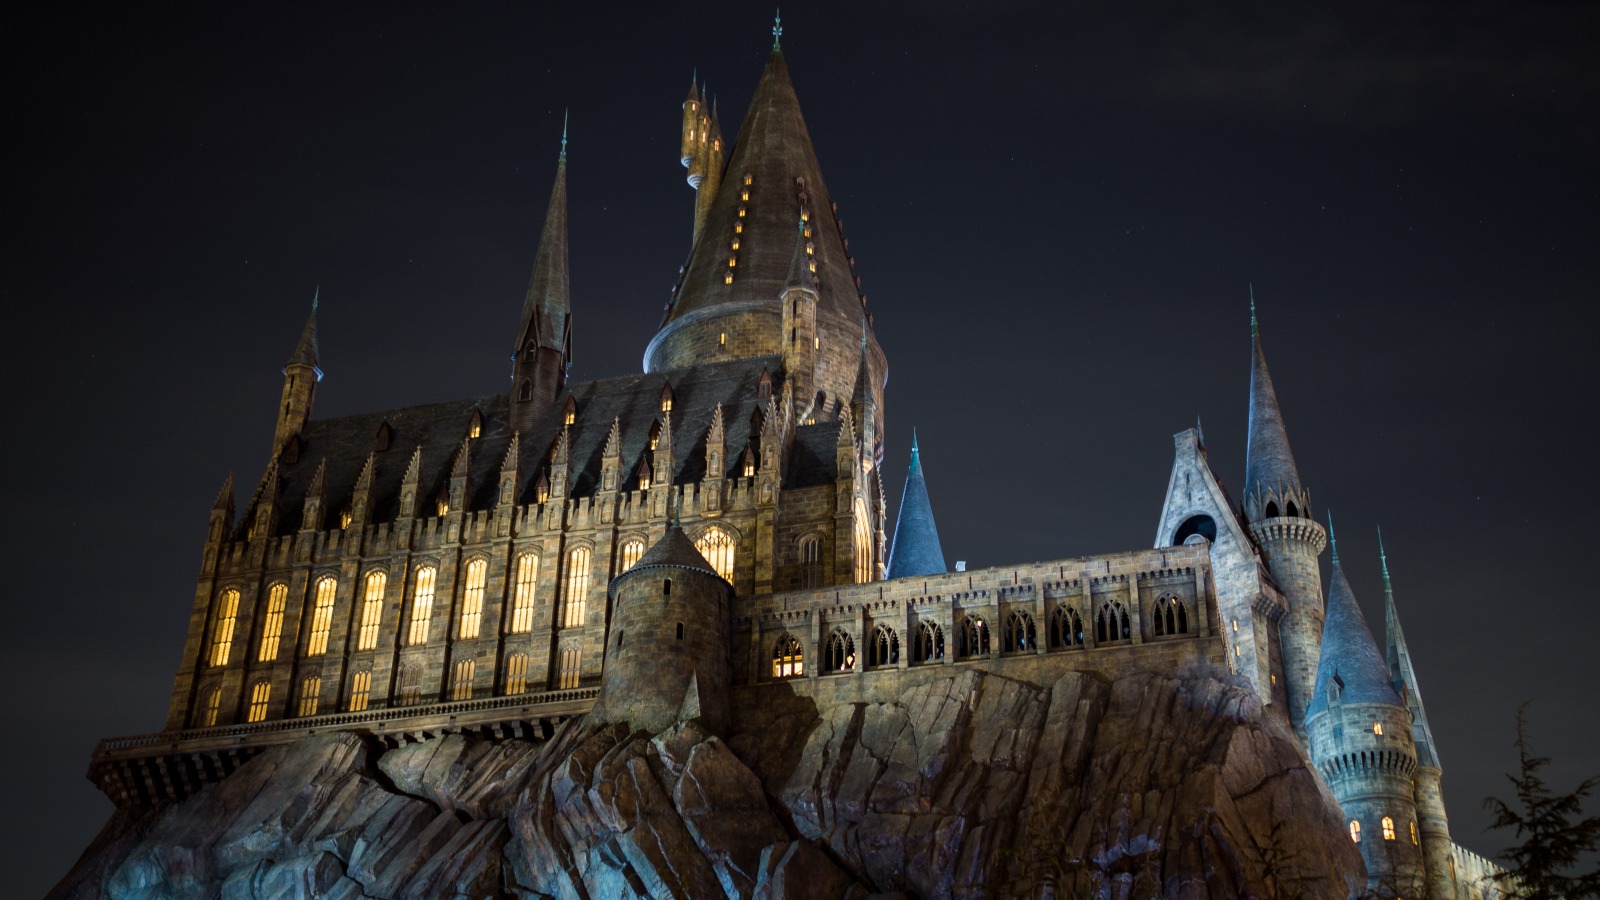 HogWarts Castle Look alike Disney Pun Harry Potter Magical Fantasy Land Palace